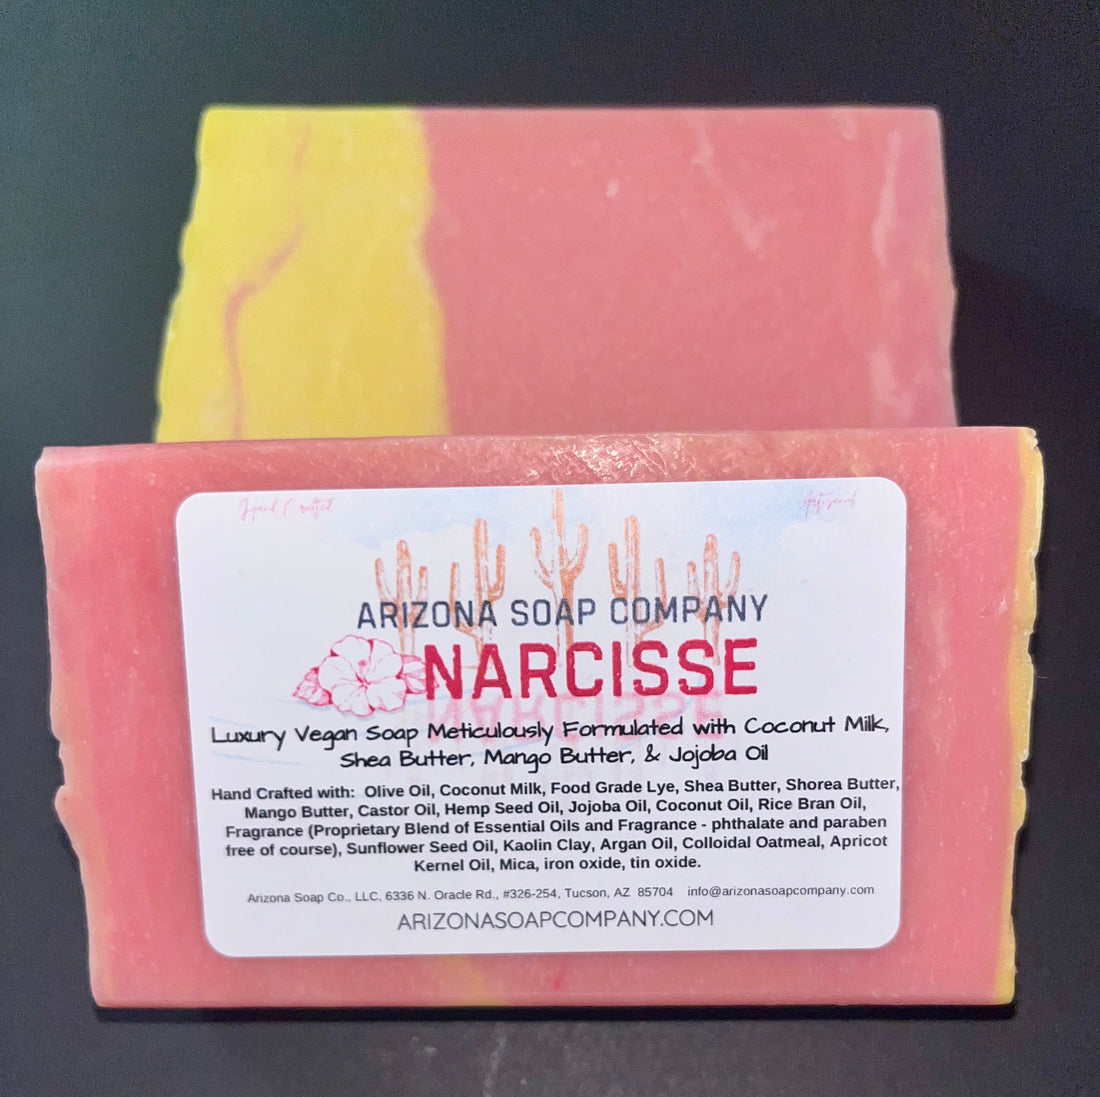 Narcisse soap